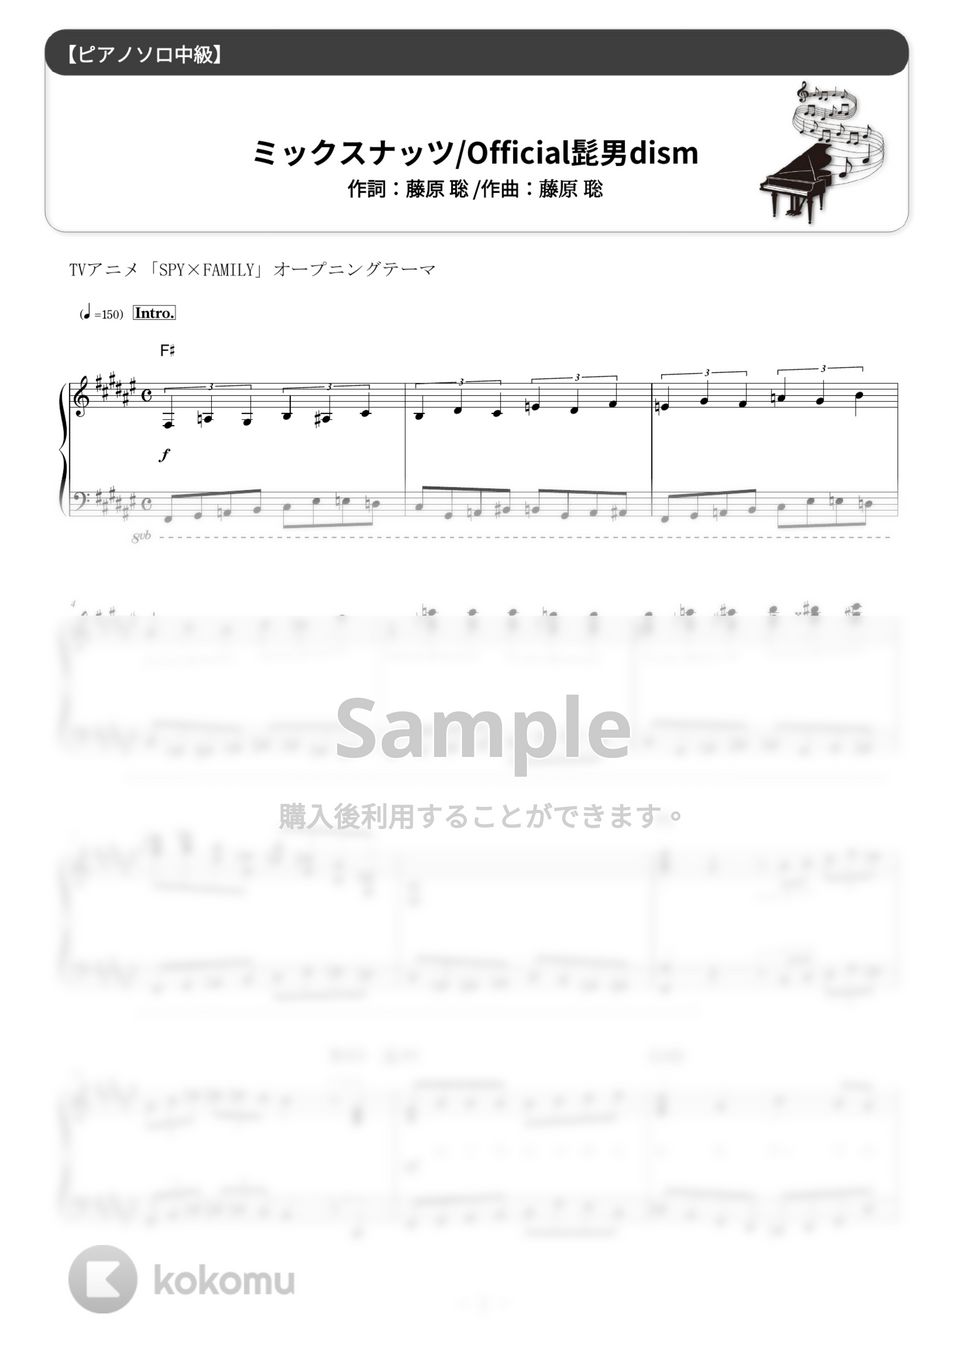 Official髭男dism - ミックスナッツ (難易度：★★★☆☆/アニメ『SPY×FAMILY』主題歌) by Dさん